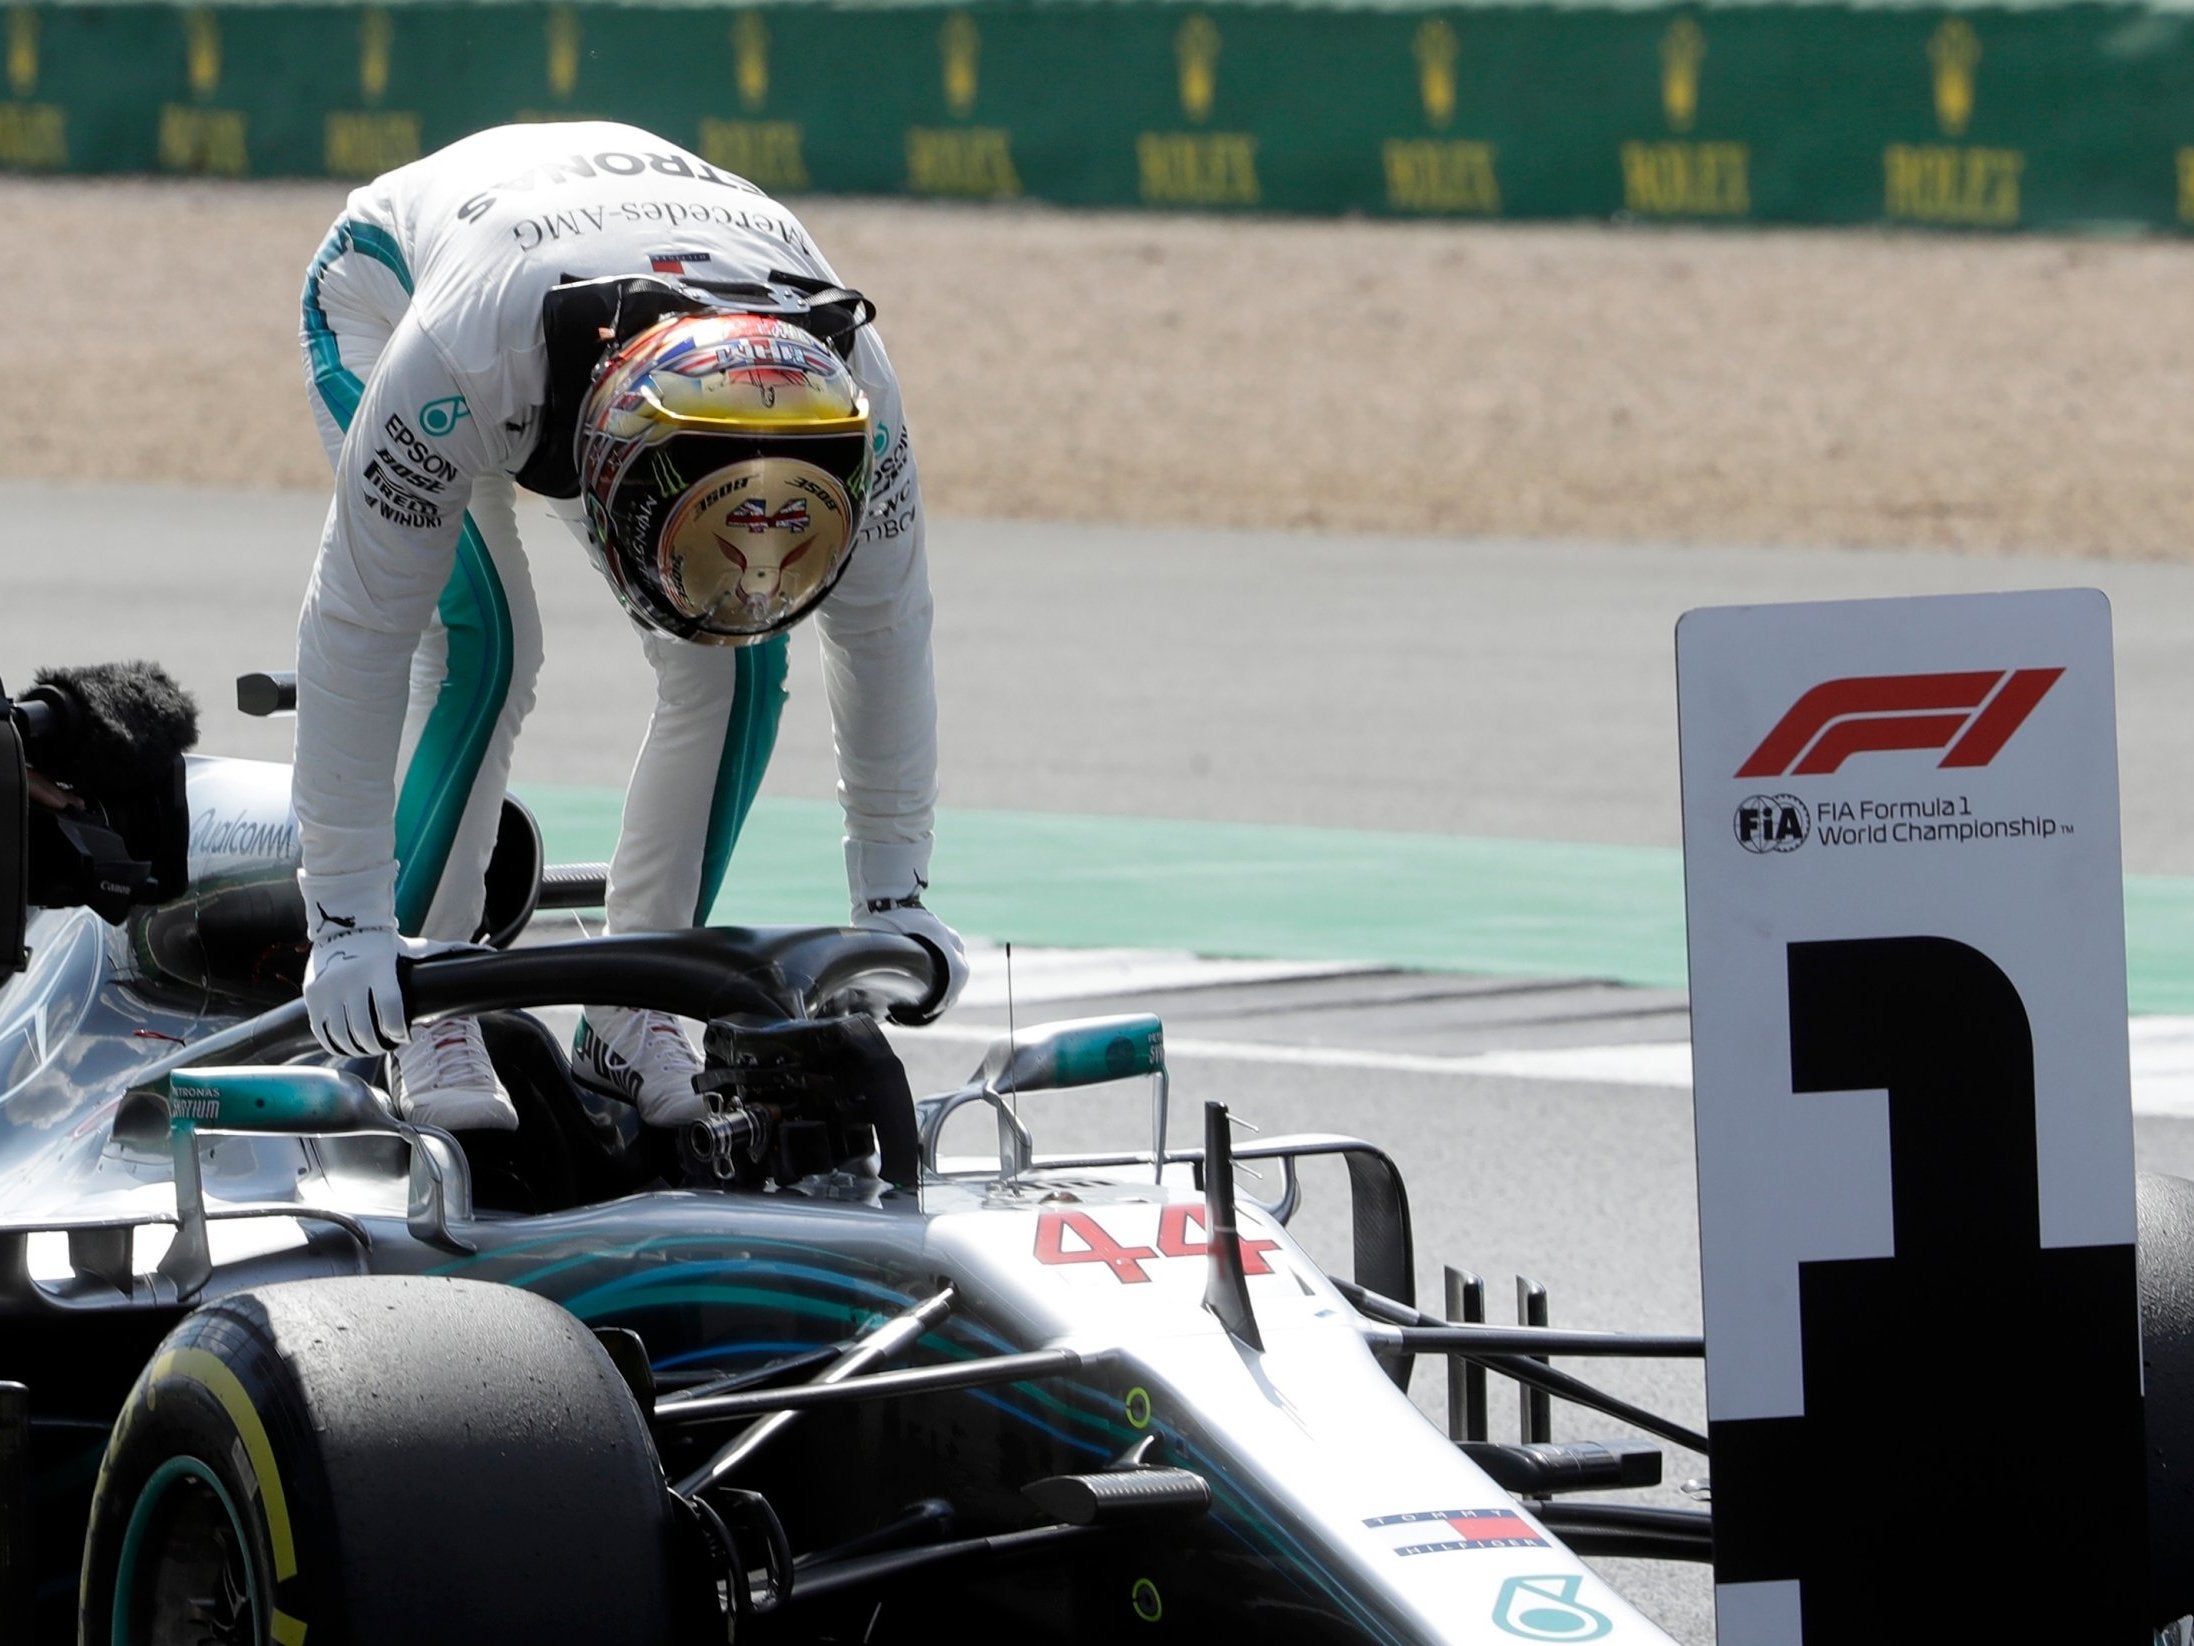 Lewis Hamilton will start the British Grand Prix from pole